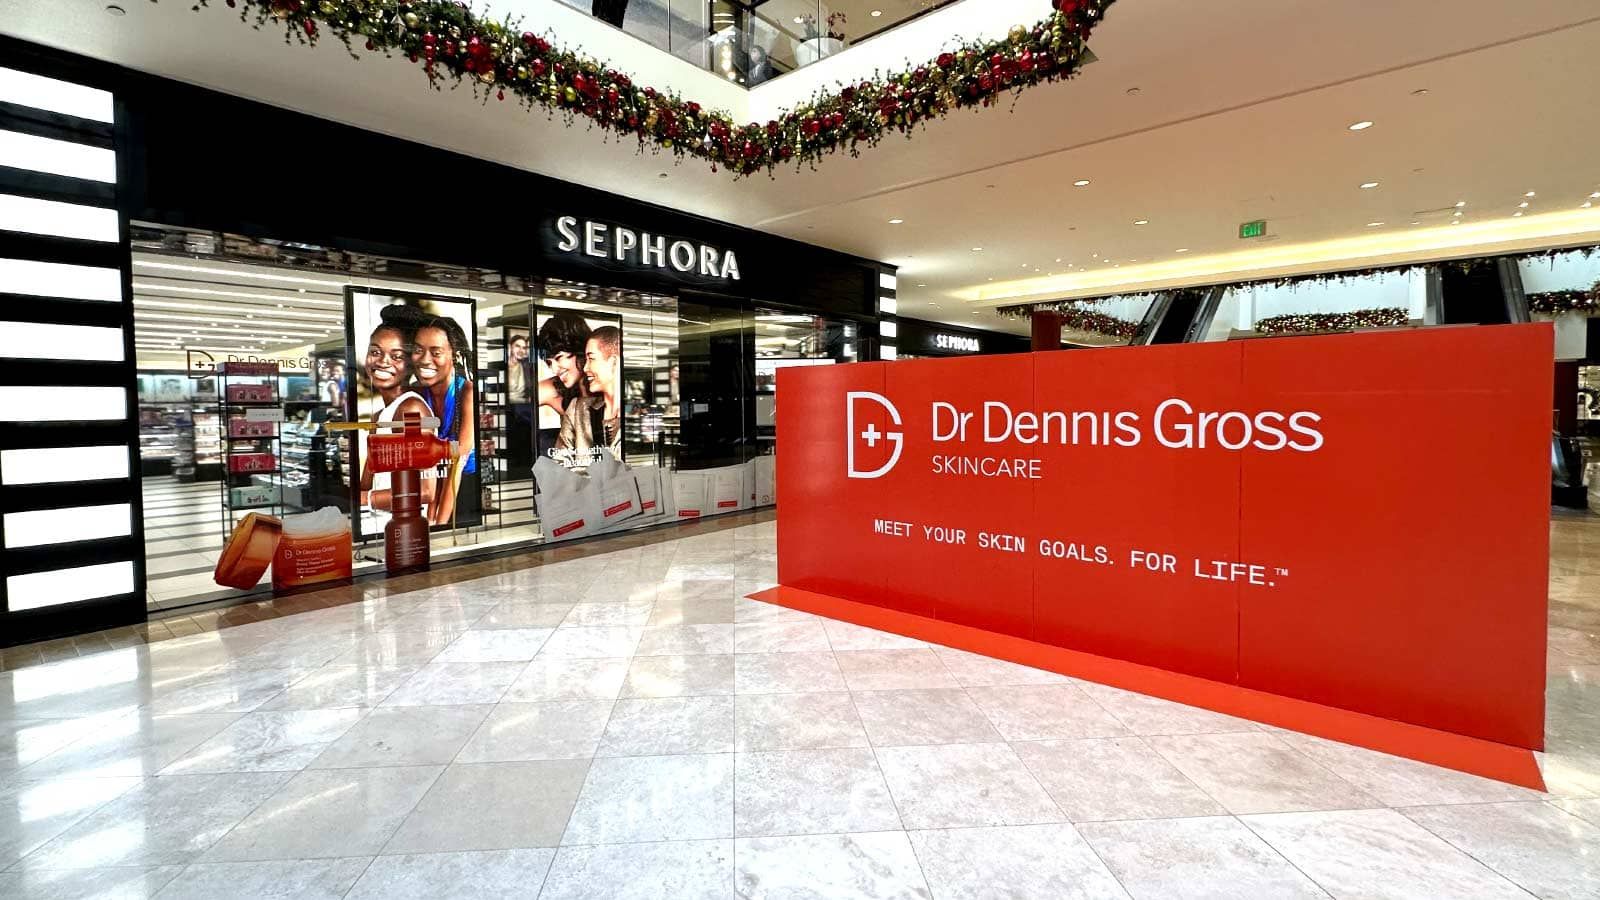 Dr Dennis Gross interior signs for store branding